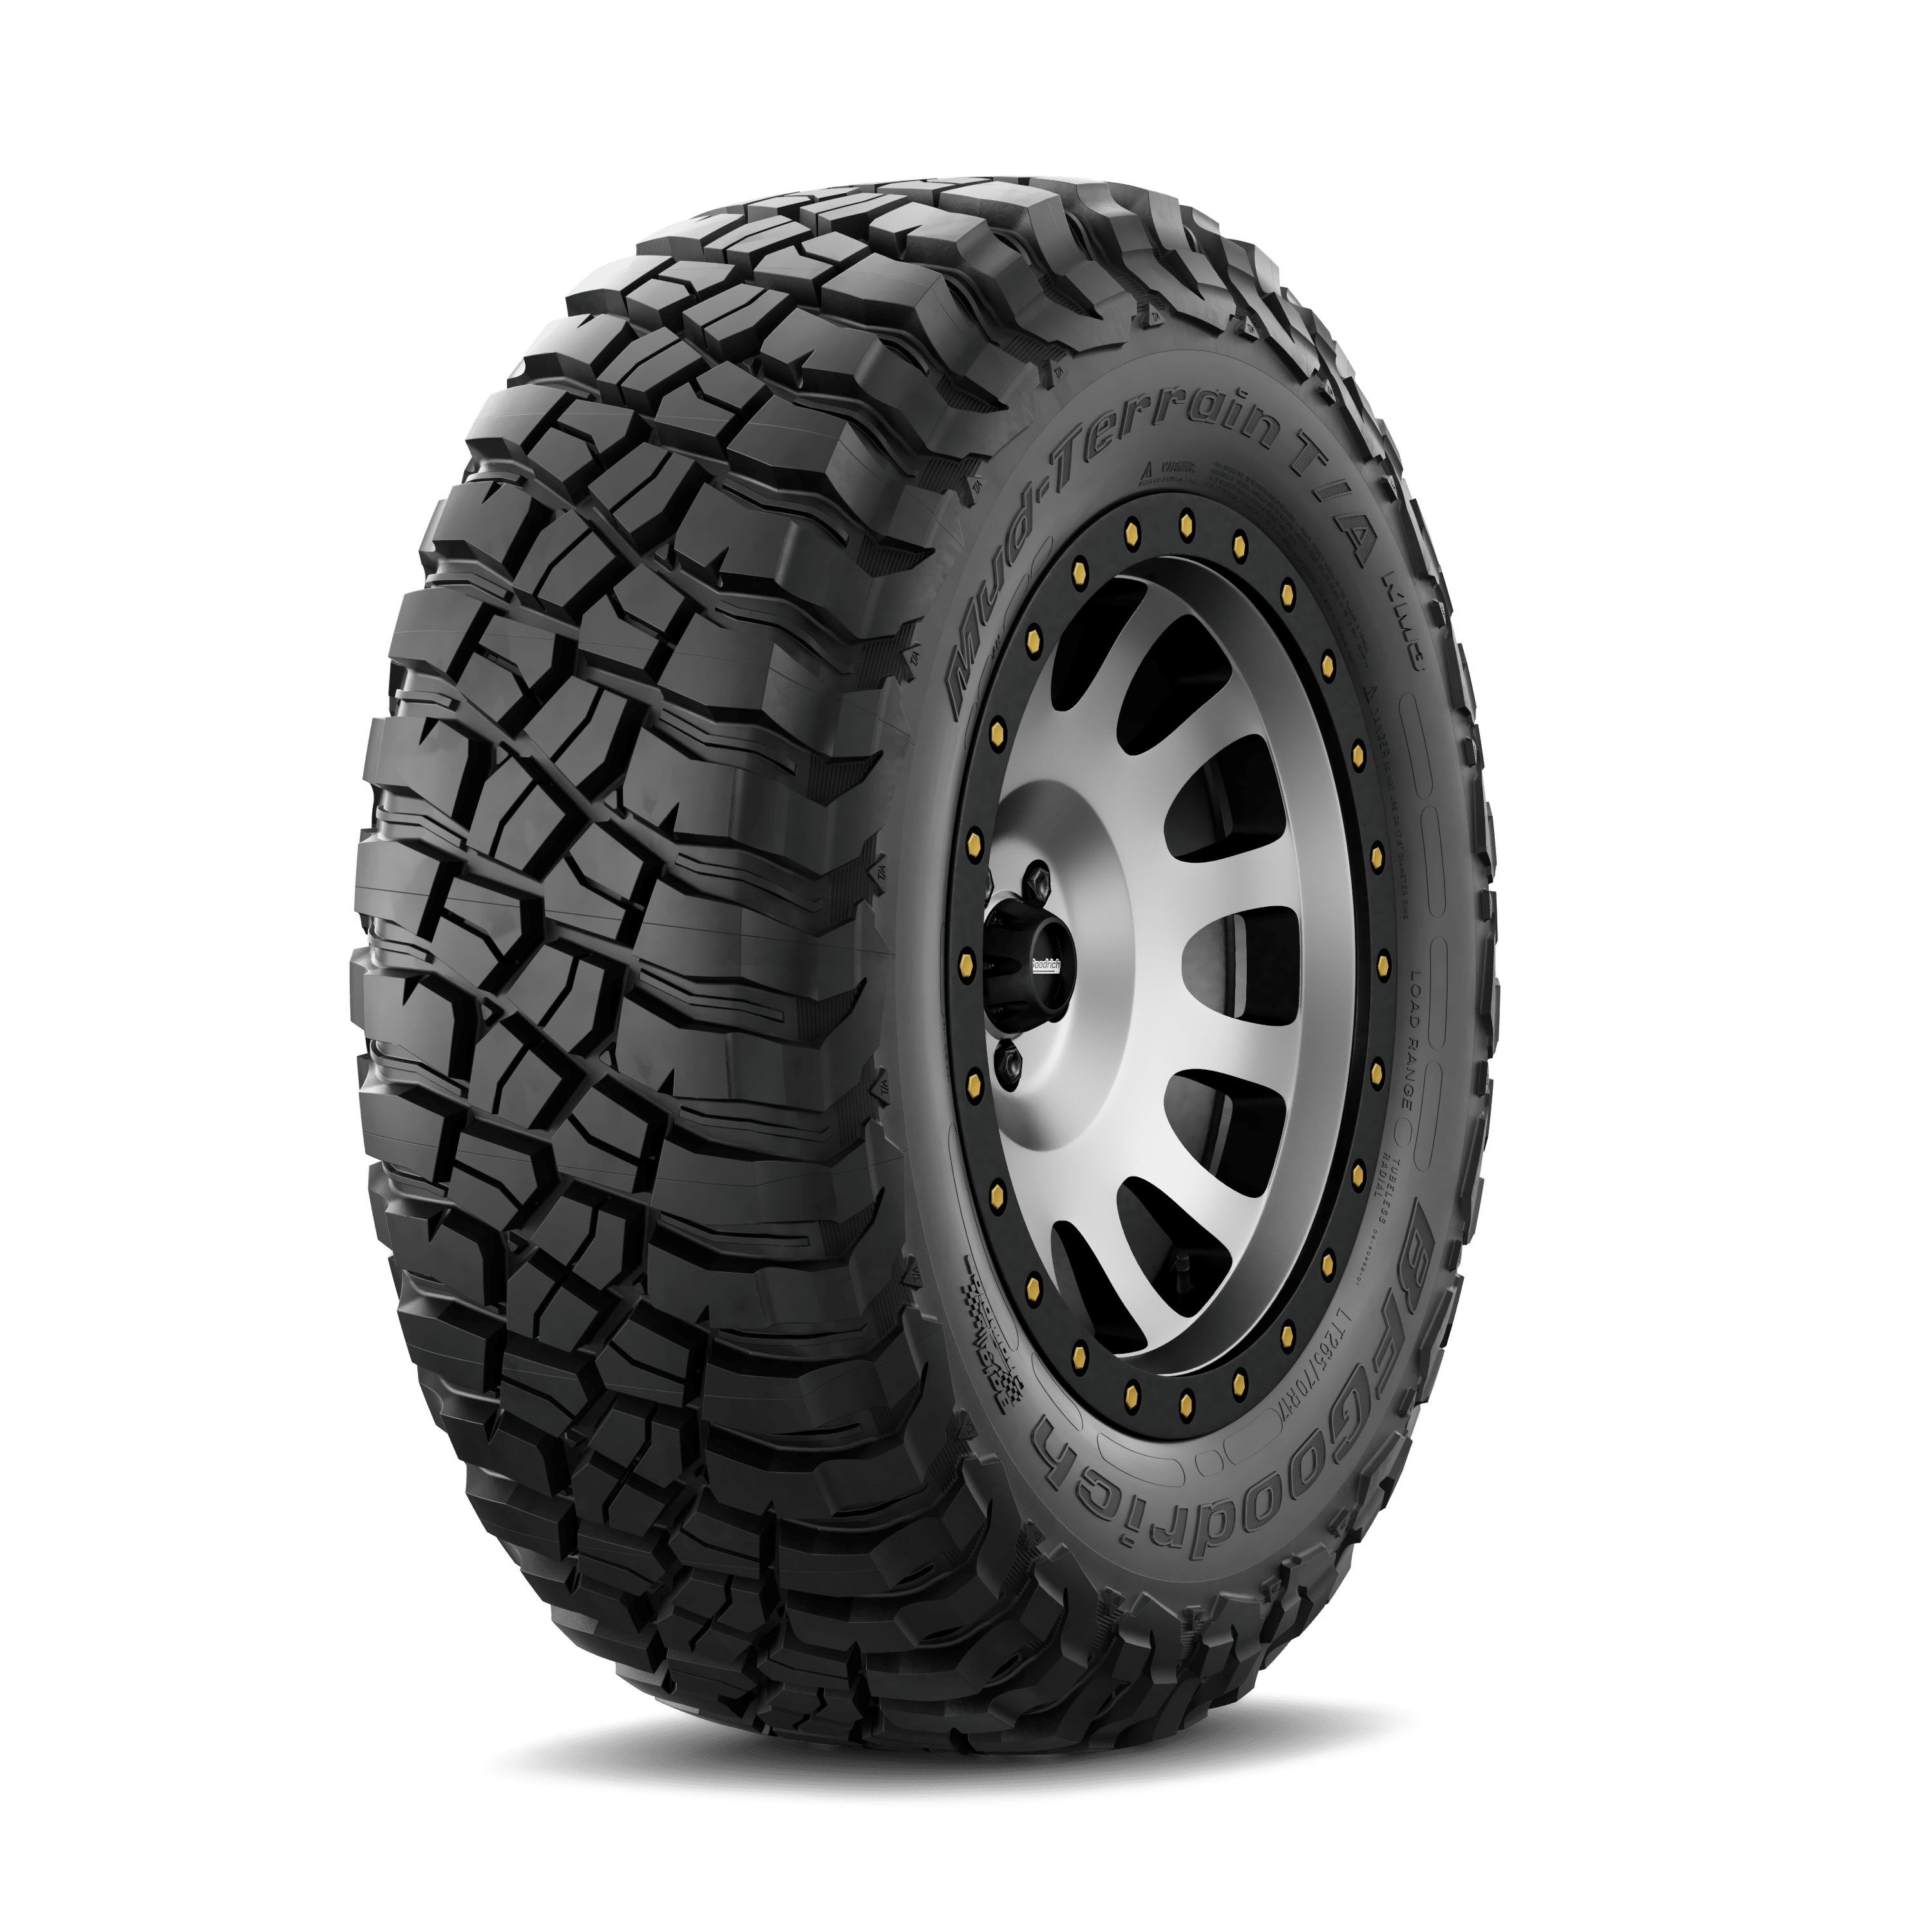 Mud-Terrain T/A KM3 4x4 Tires | BFGoodrich MENA